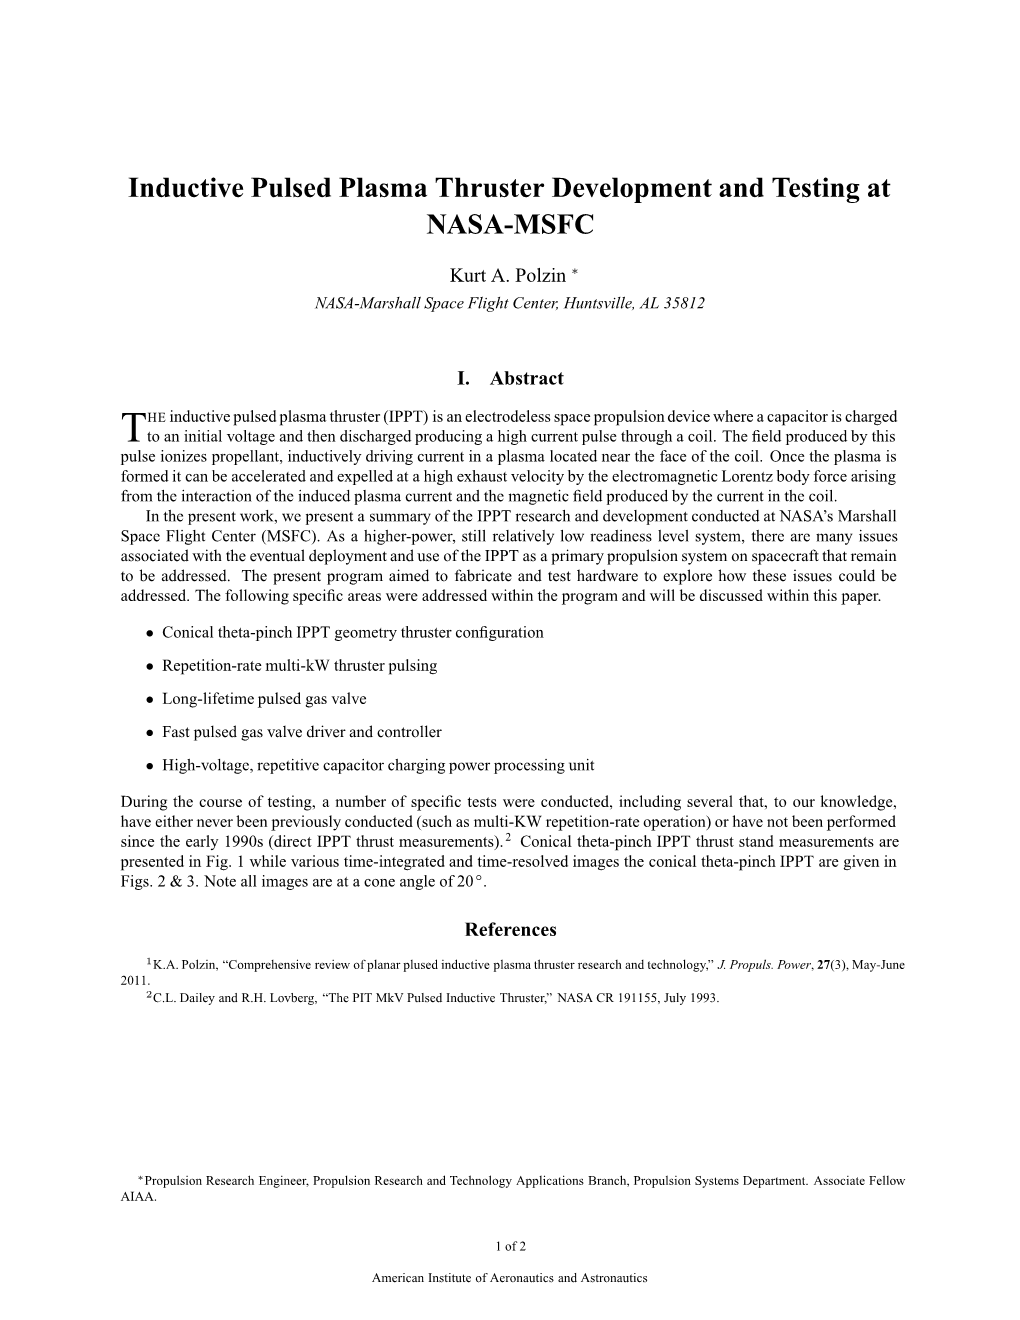 Inductive Pulsed Plasma Thruster Development and Testing at NASA-MSFC